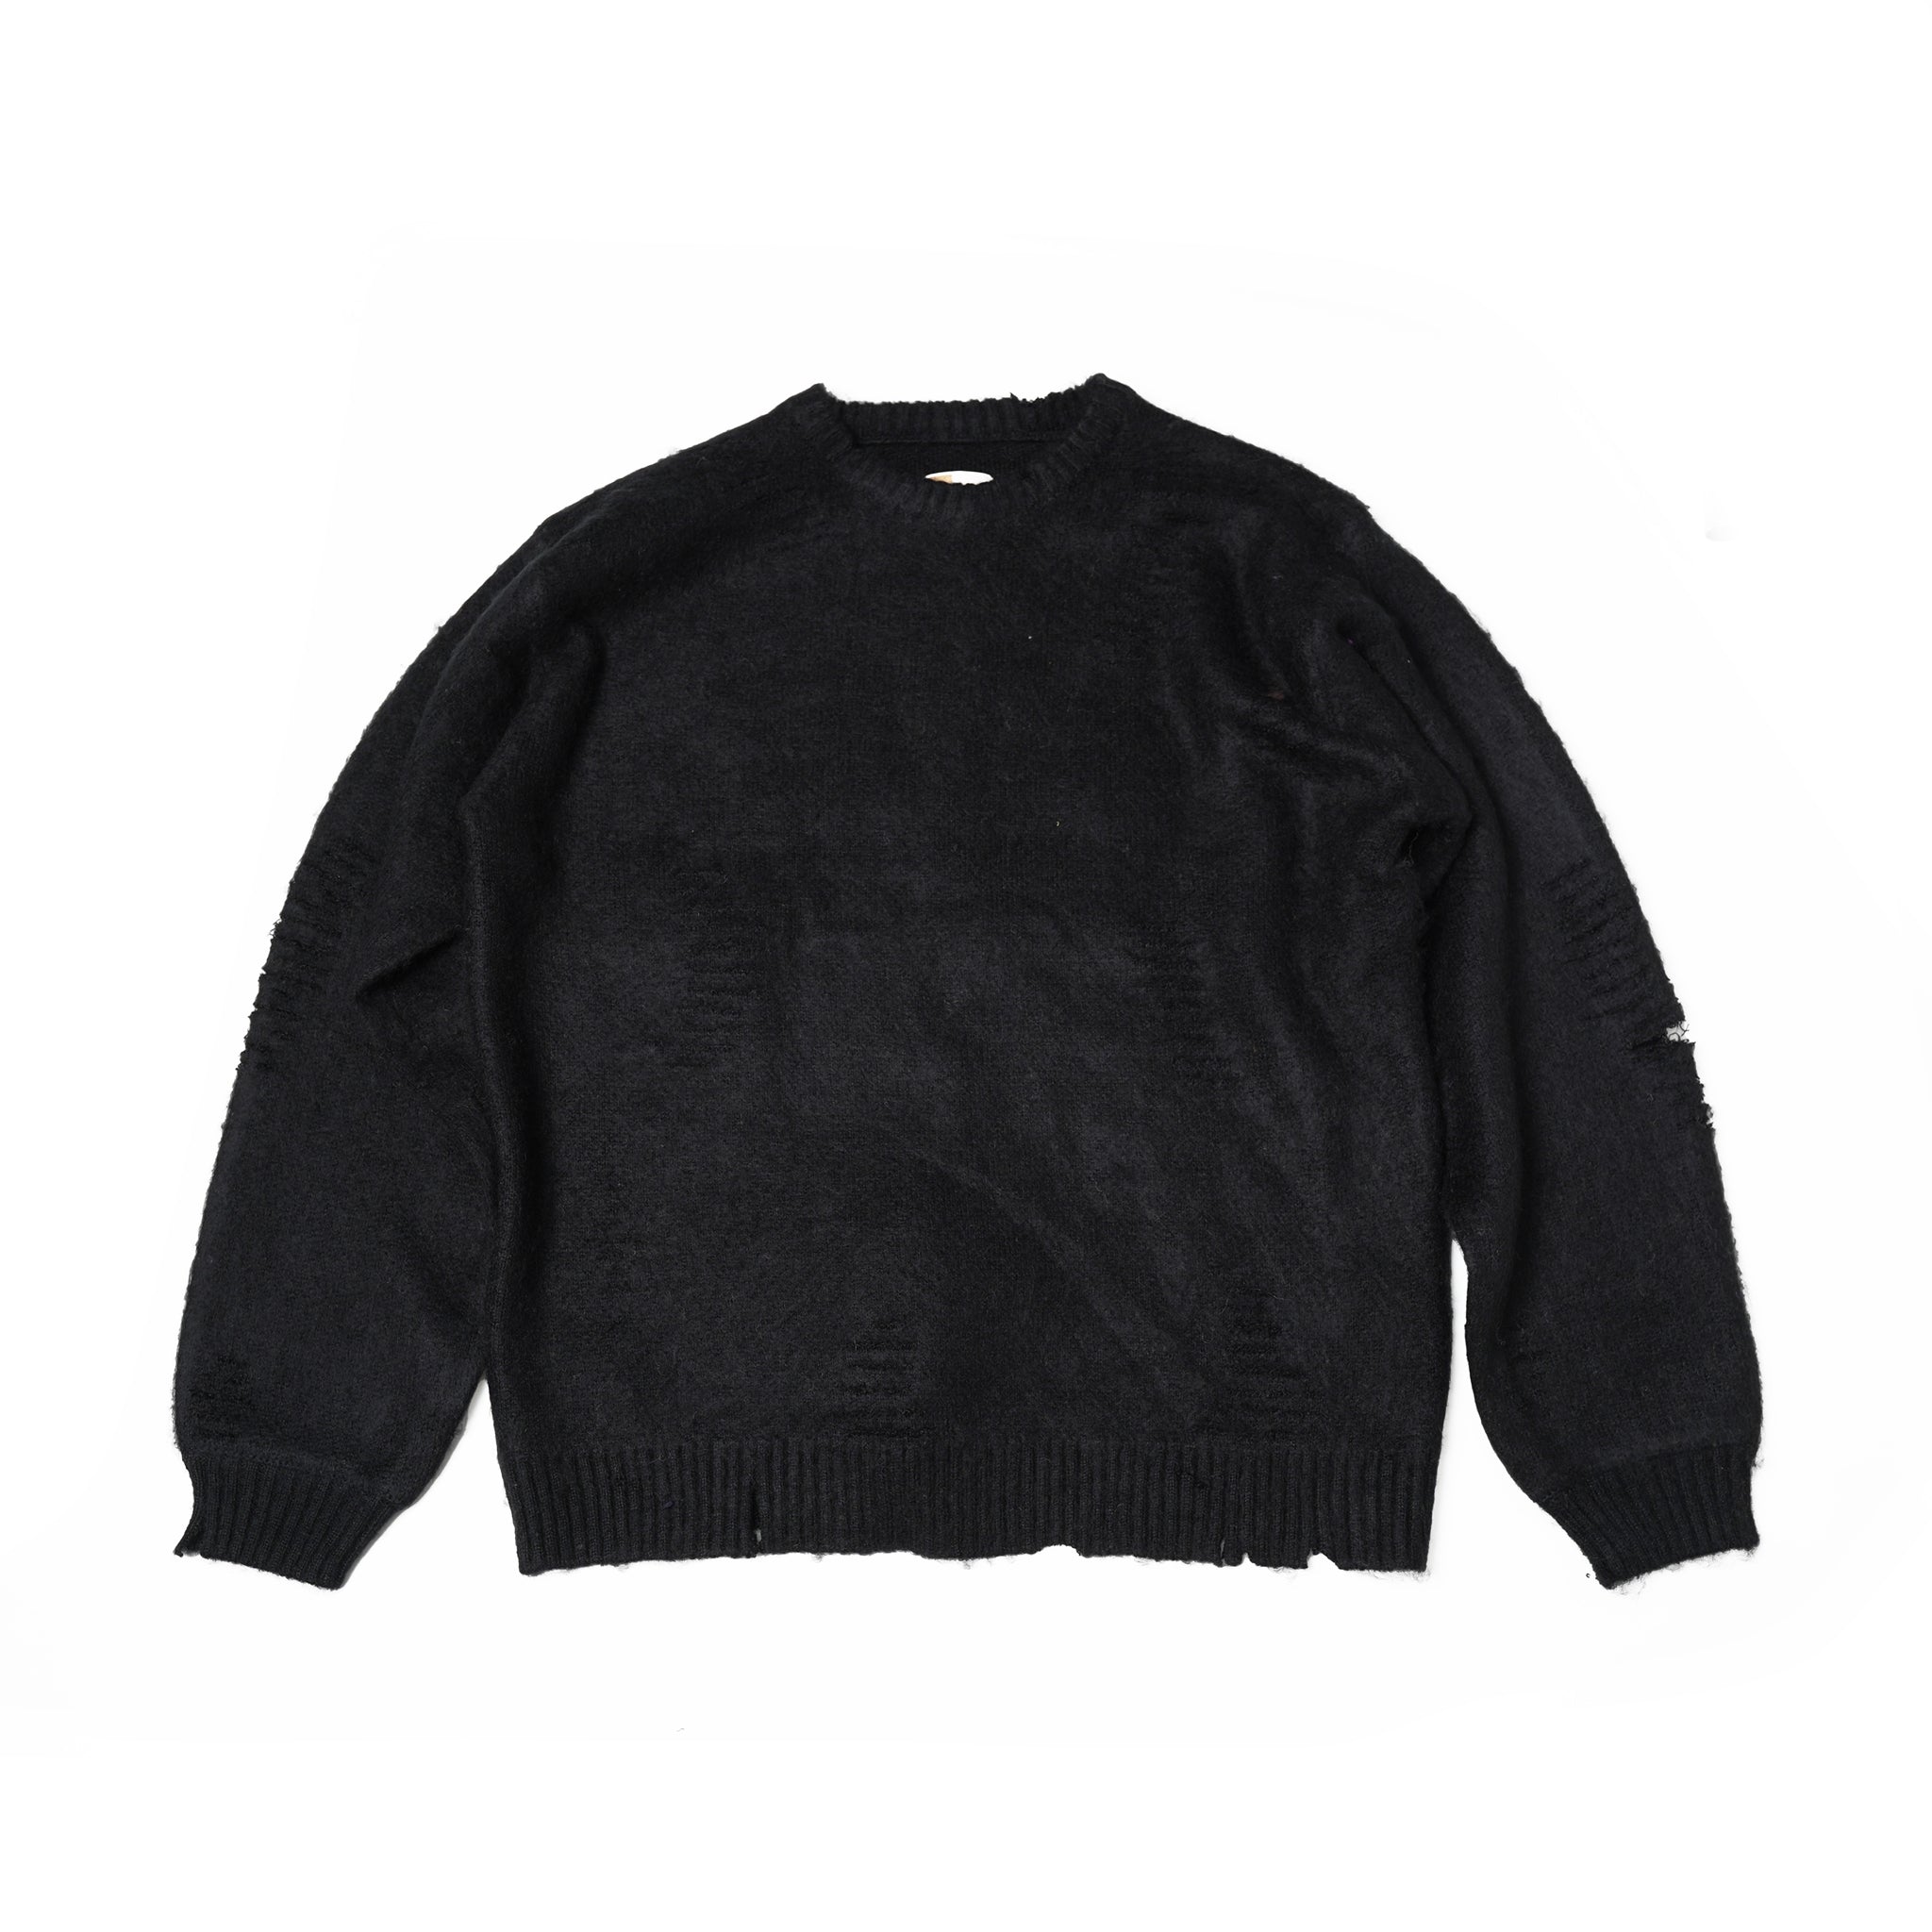 No:tc23f012 | Name:shaggy color crew sweater | Color:Black_Wornout